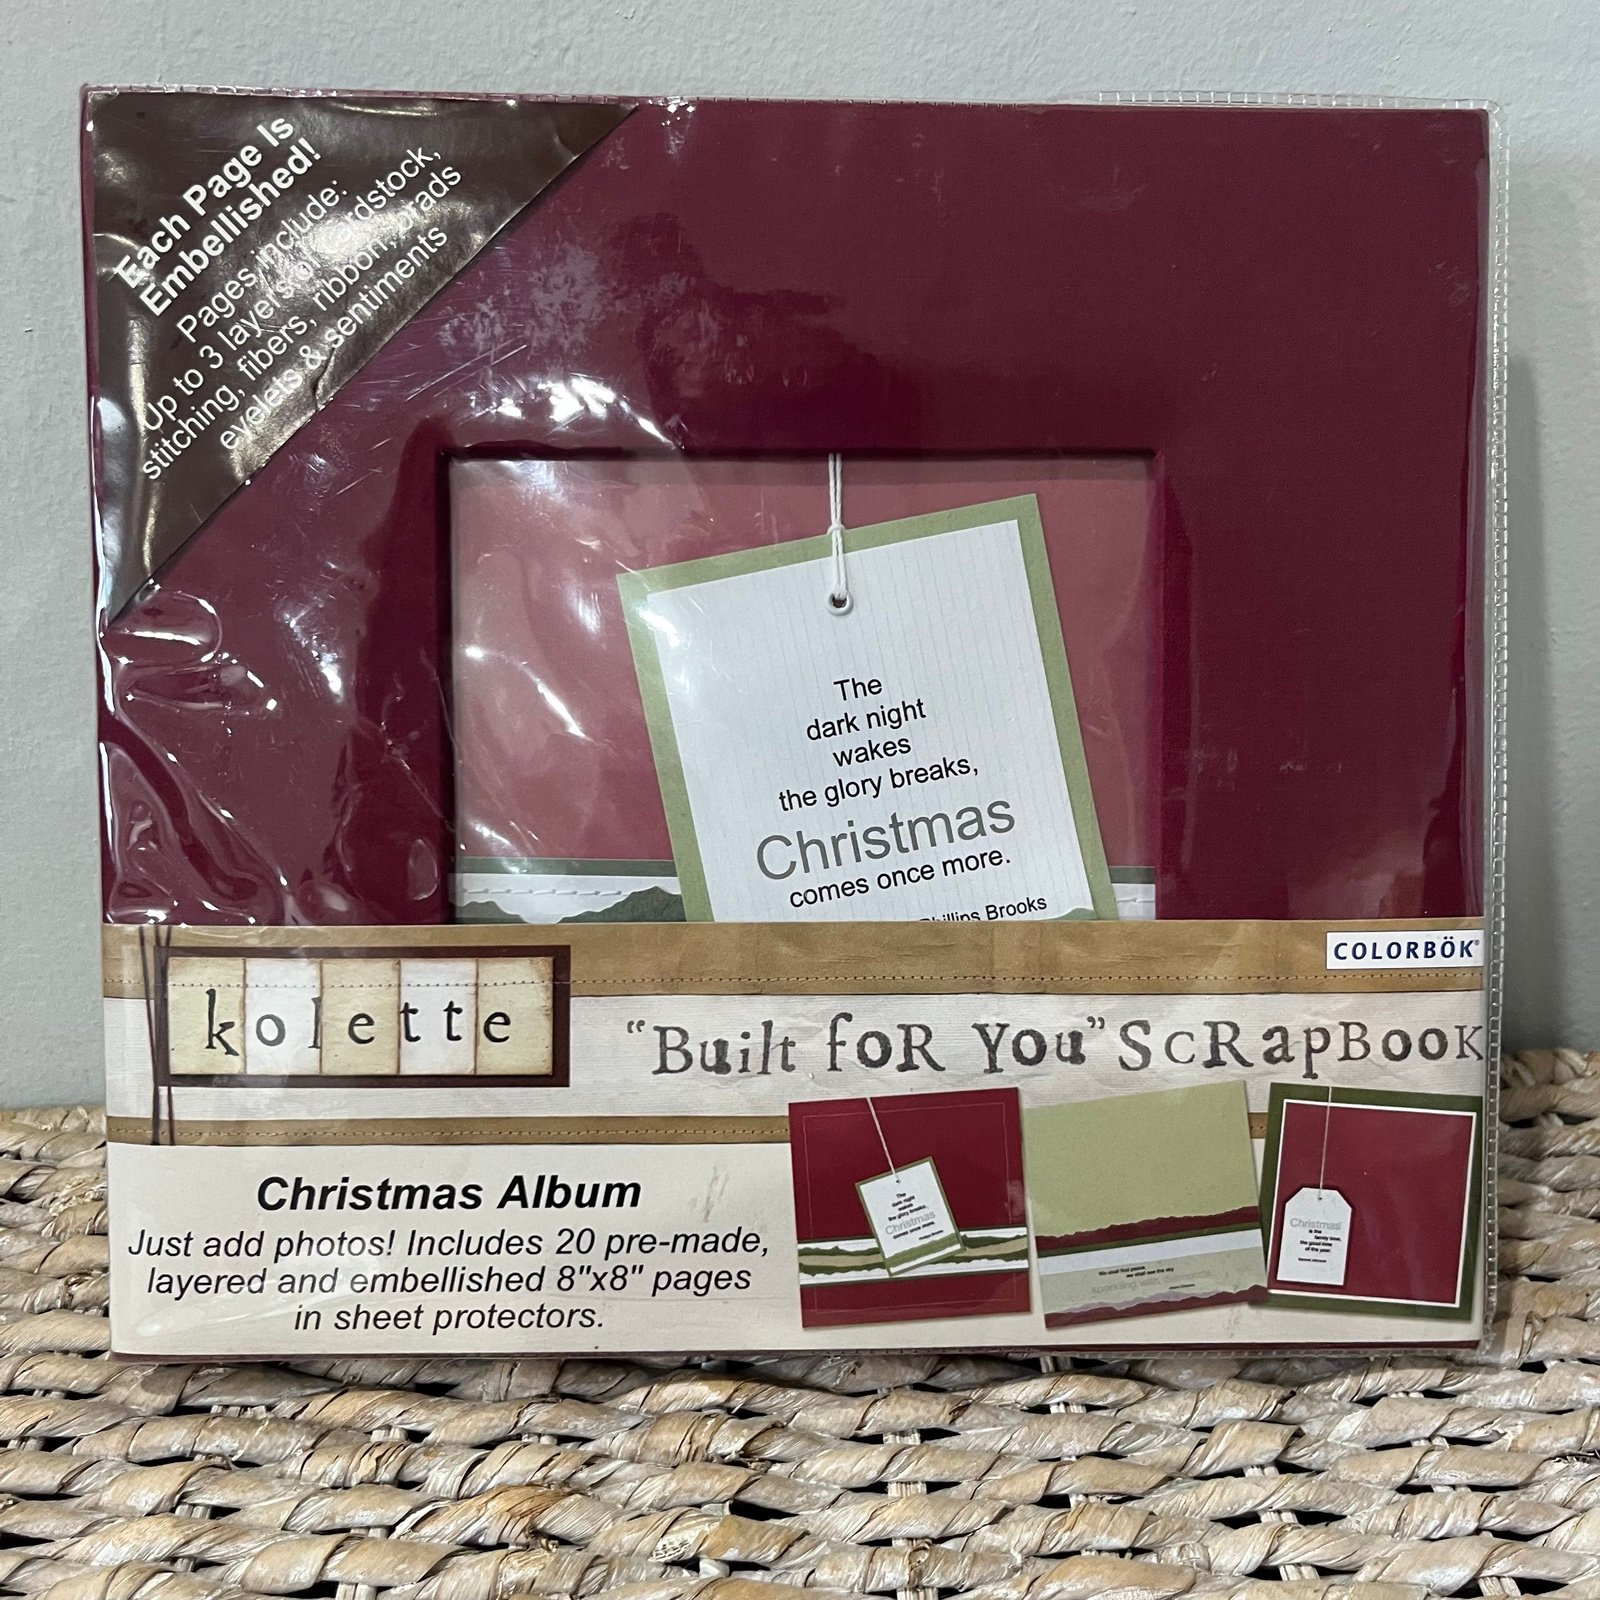 NEW COLORBOK 8X8 SCRAPBOOK ALBUM CHRISTMAS HOLIDAYS Kolette Built For You RED  G H7cdsnC10